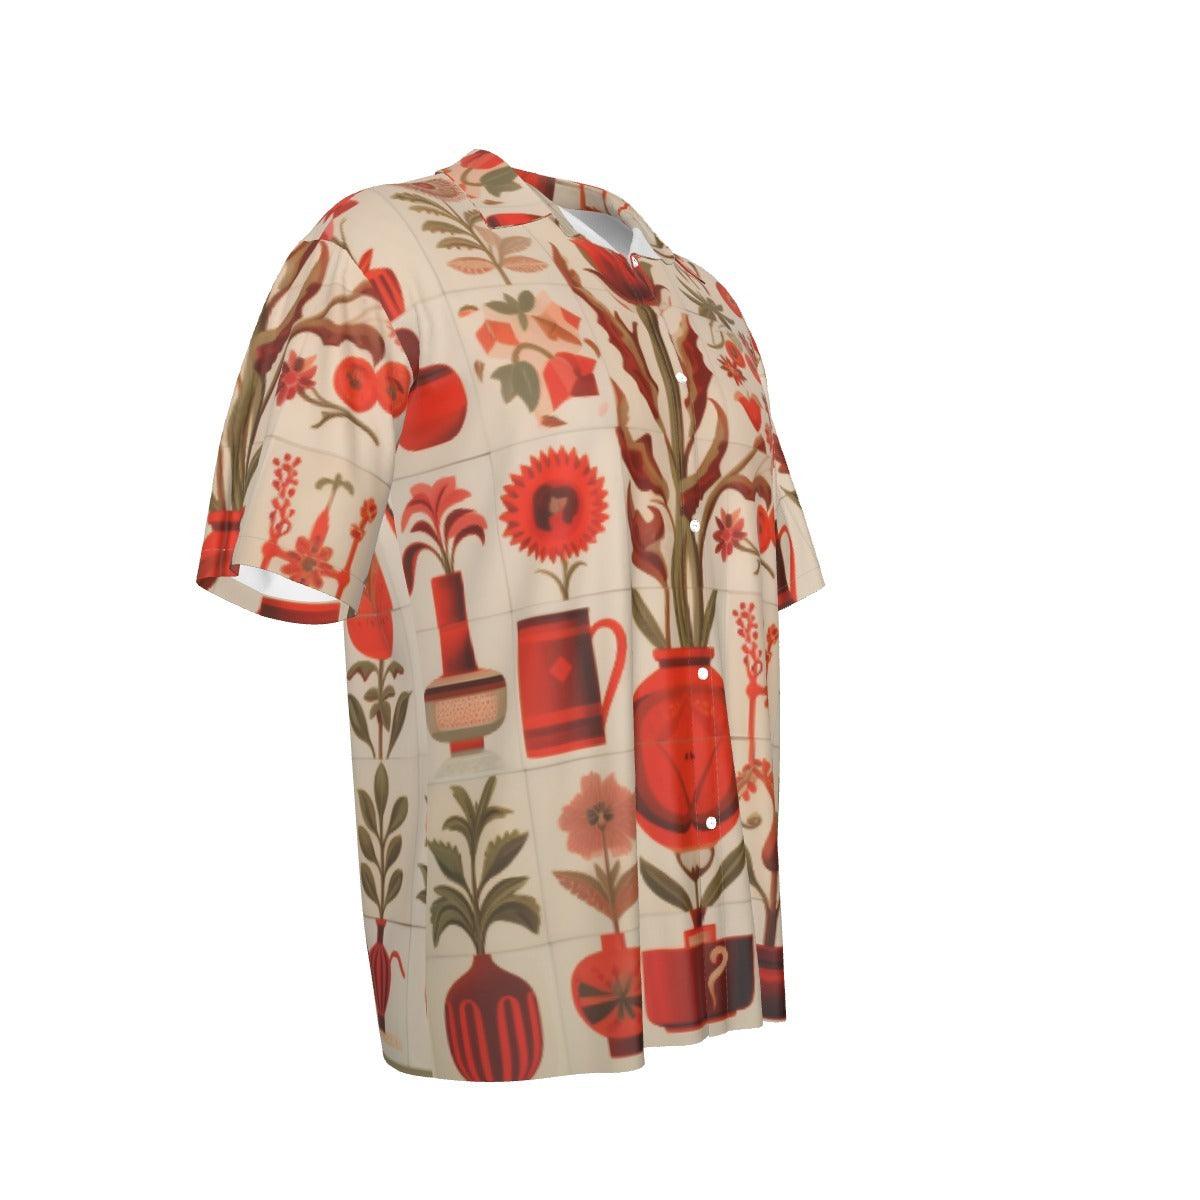 Men's Short Sleeve Shirt-Bloom Where Planted - Premium  from Elementologie - Just $24.99! Shop now at Elementologie